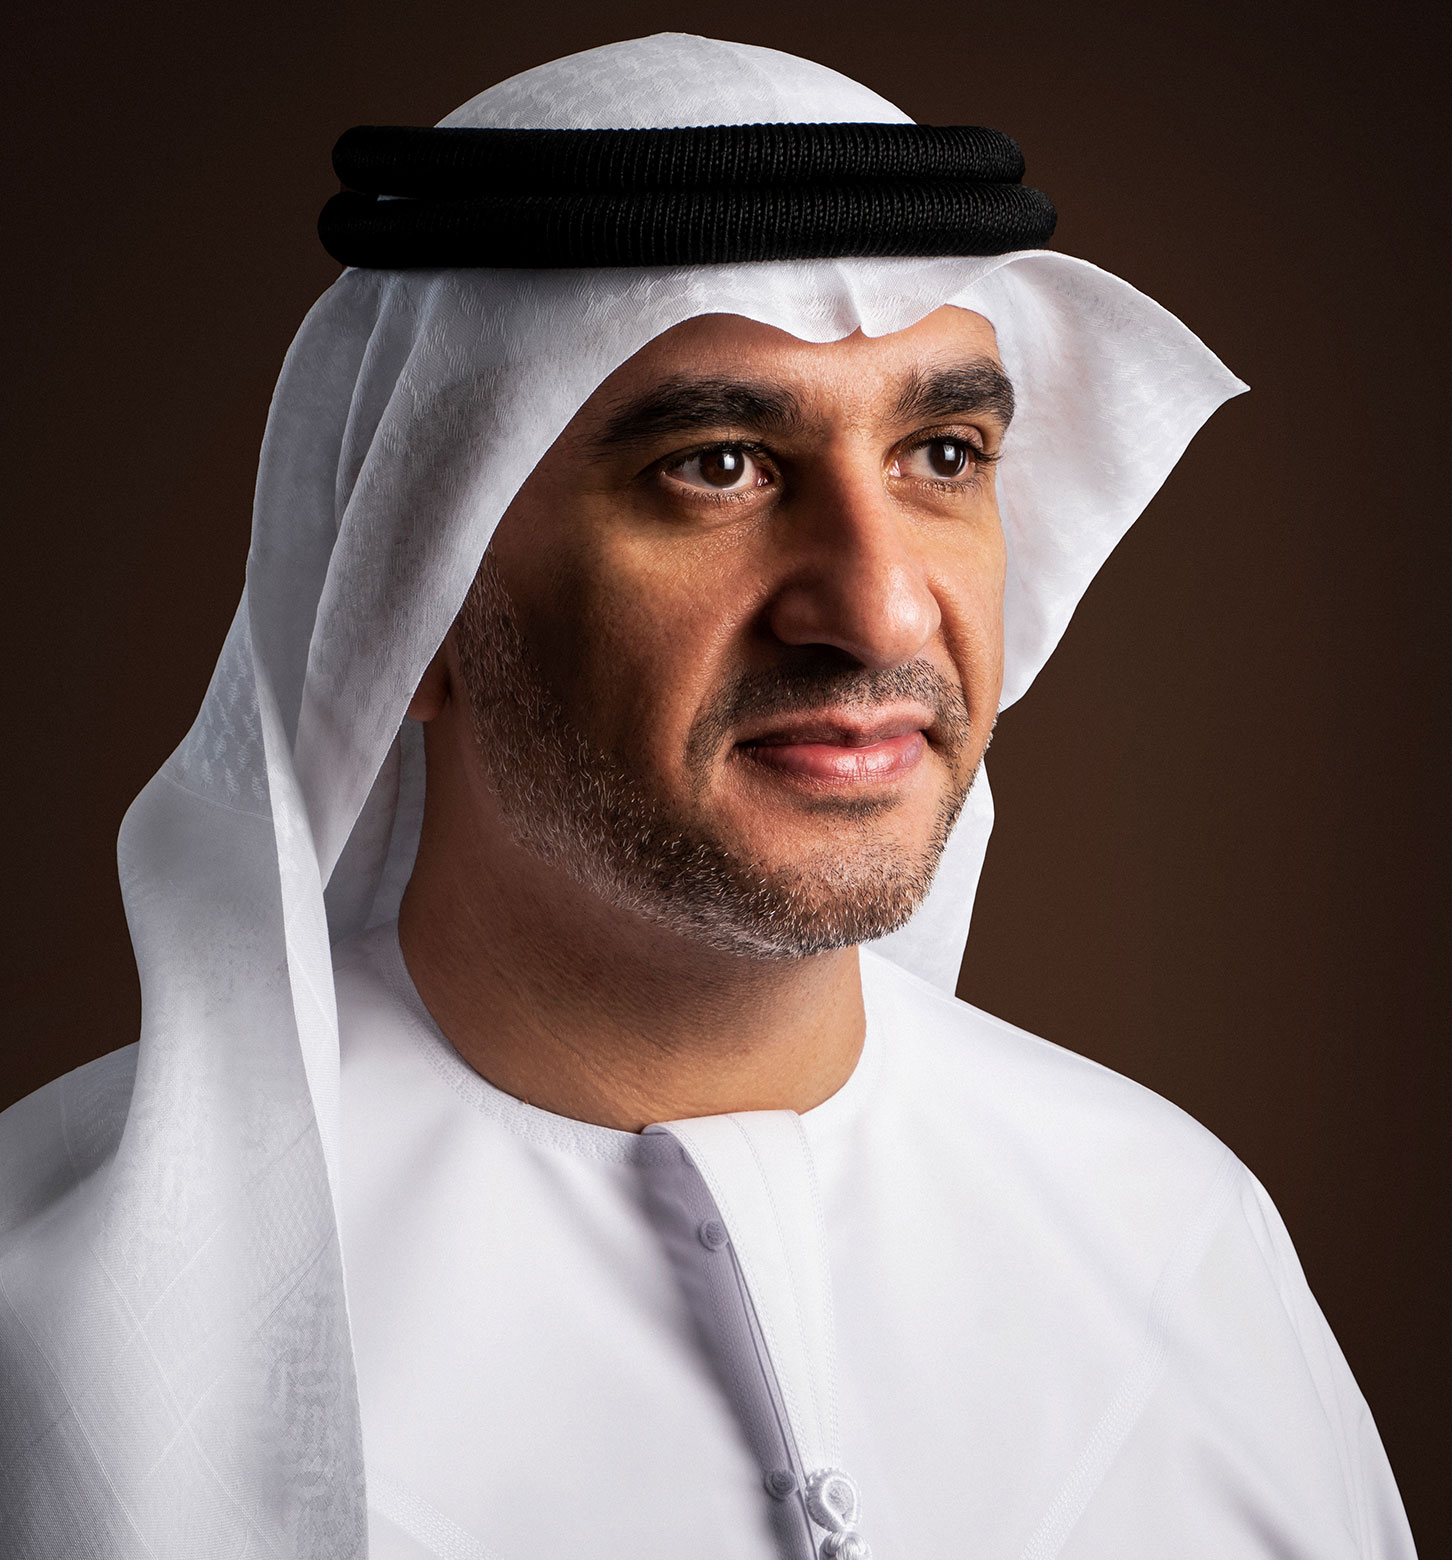 Vice President and Chief Financial Officer, Osama Ibrahim Seddiqi